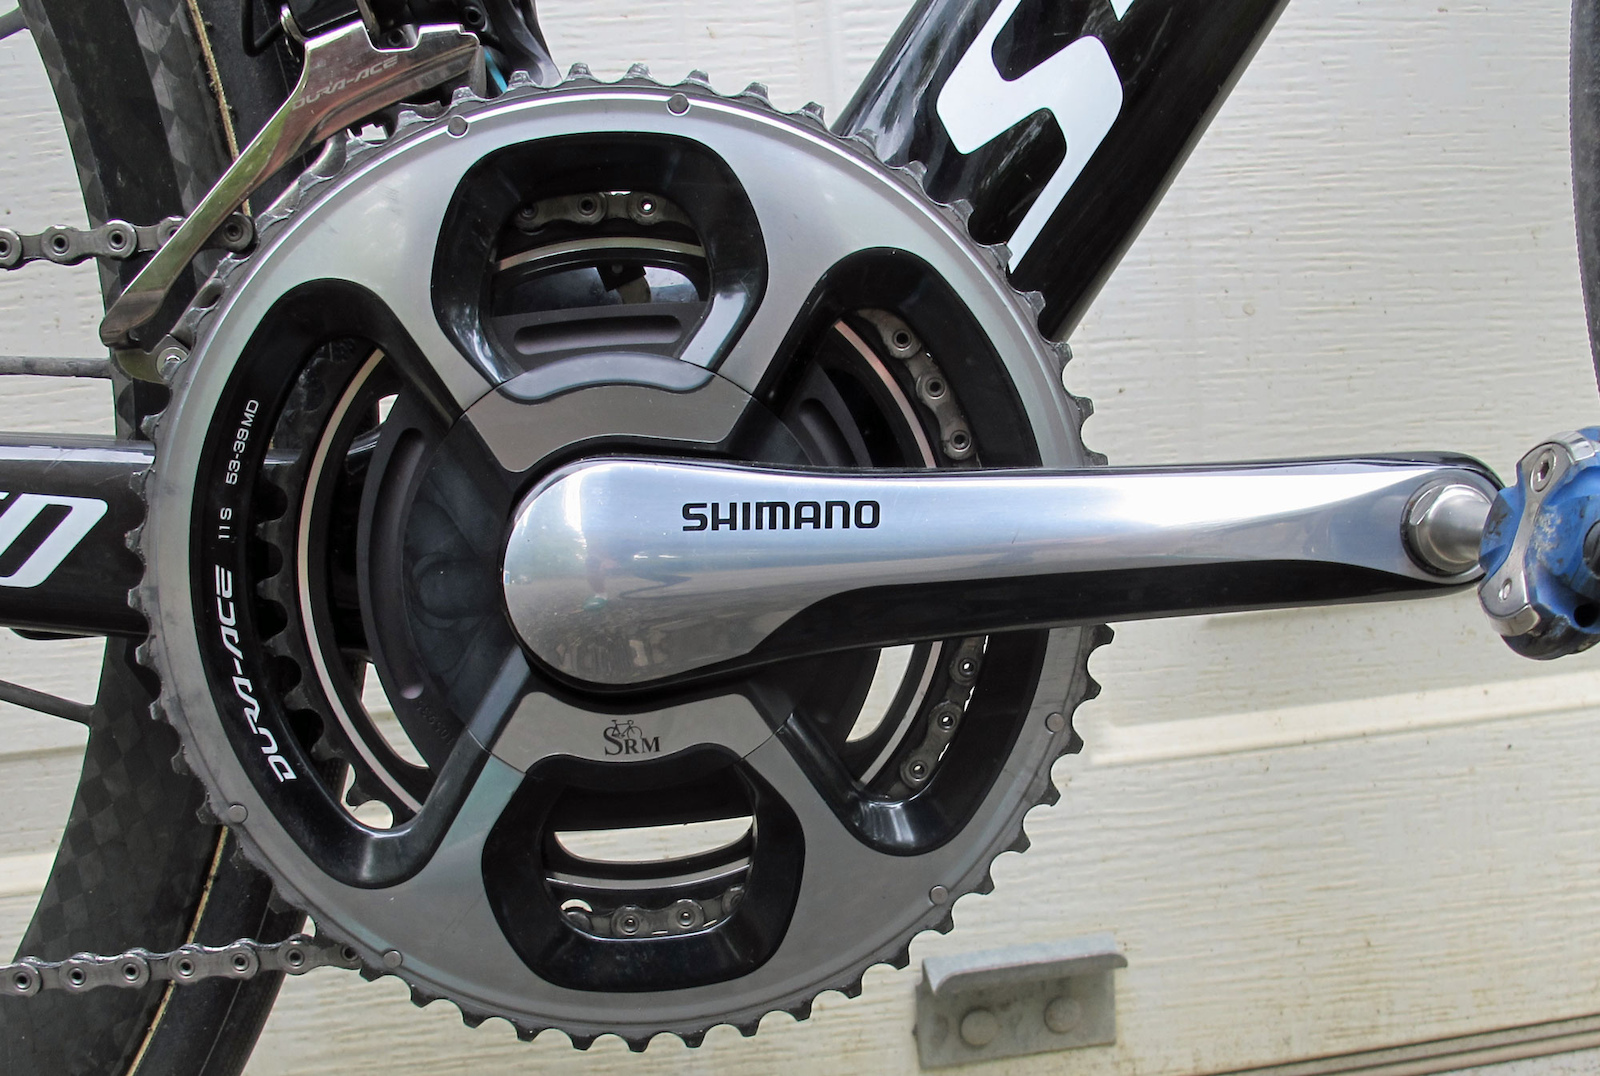 2015 Specialized S-Works Venge bike 54cm